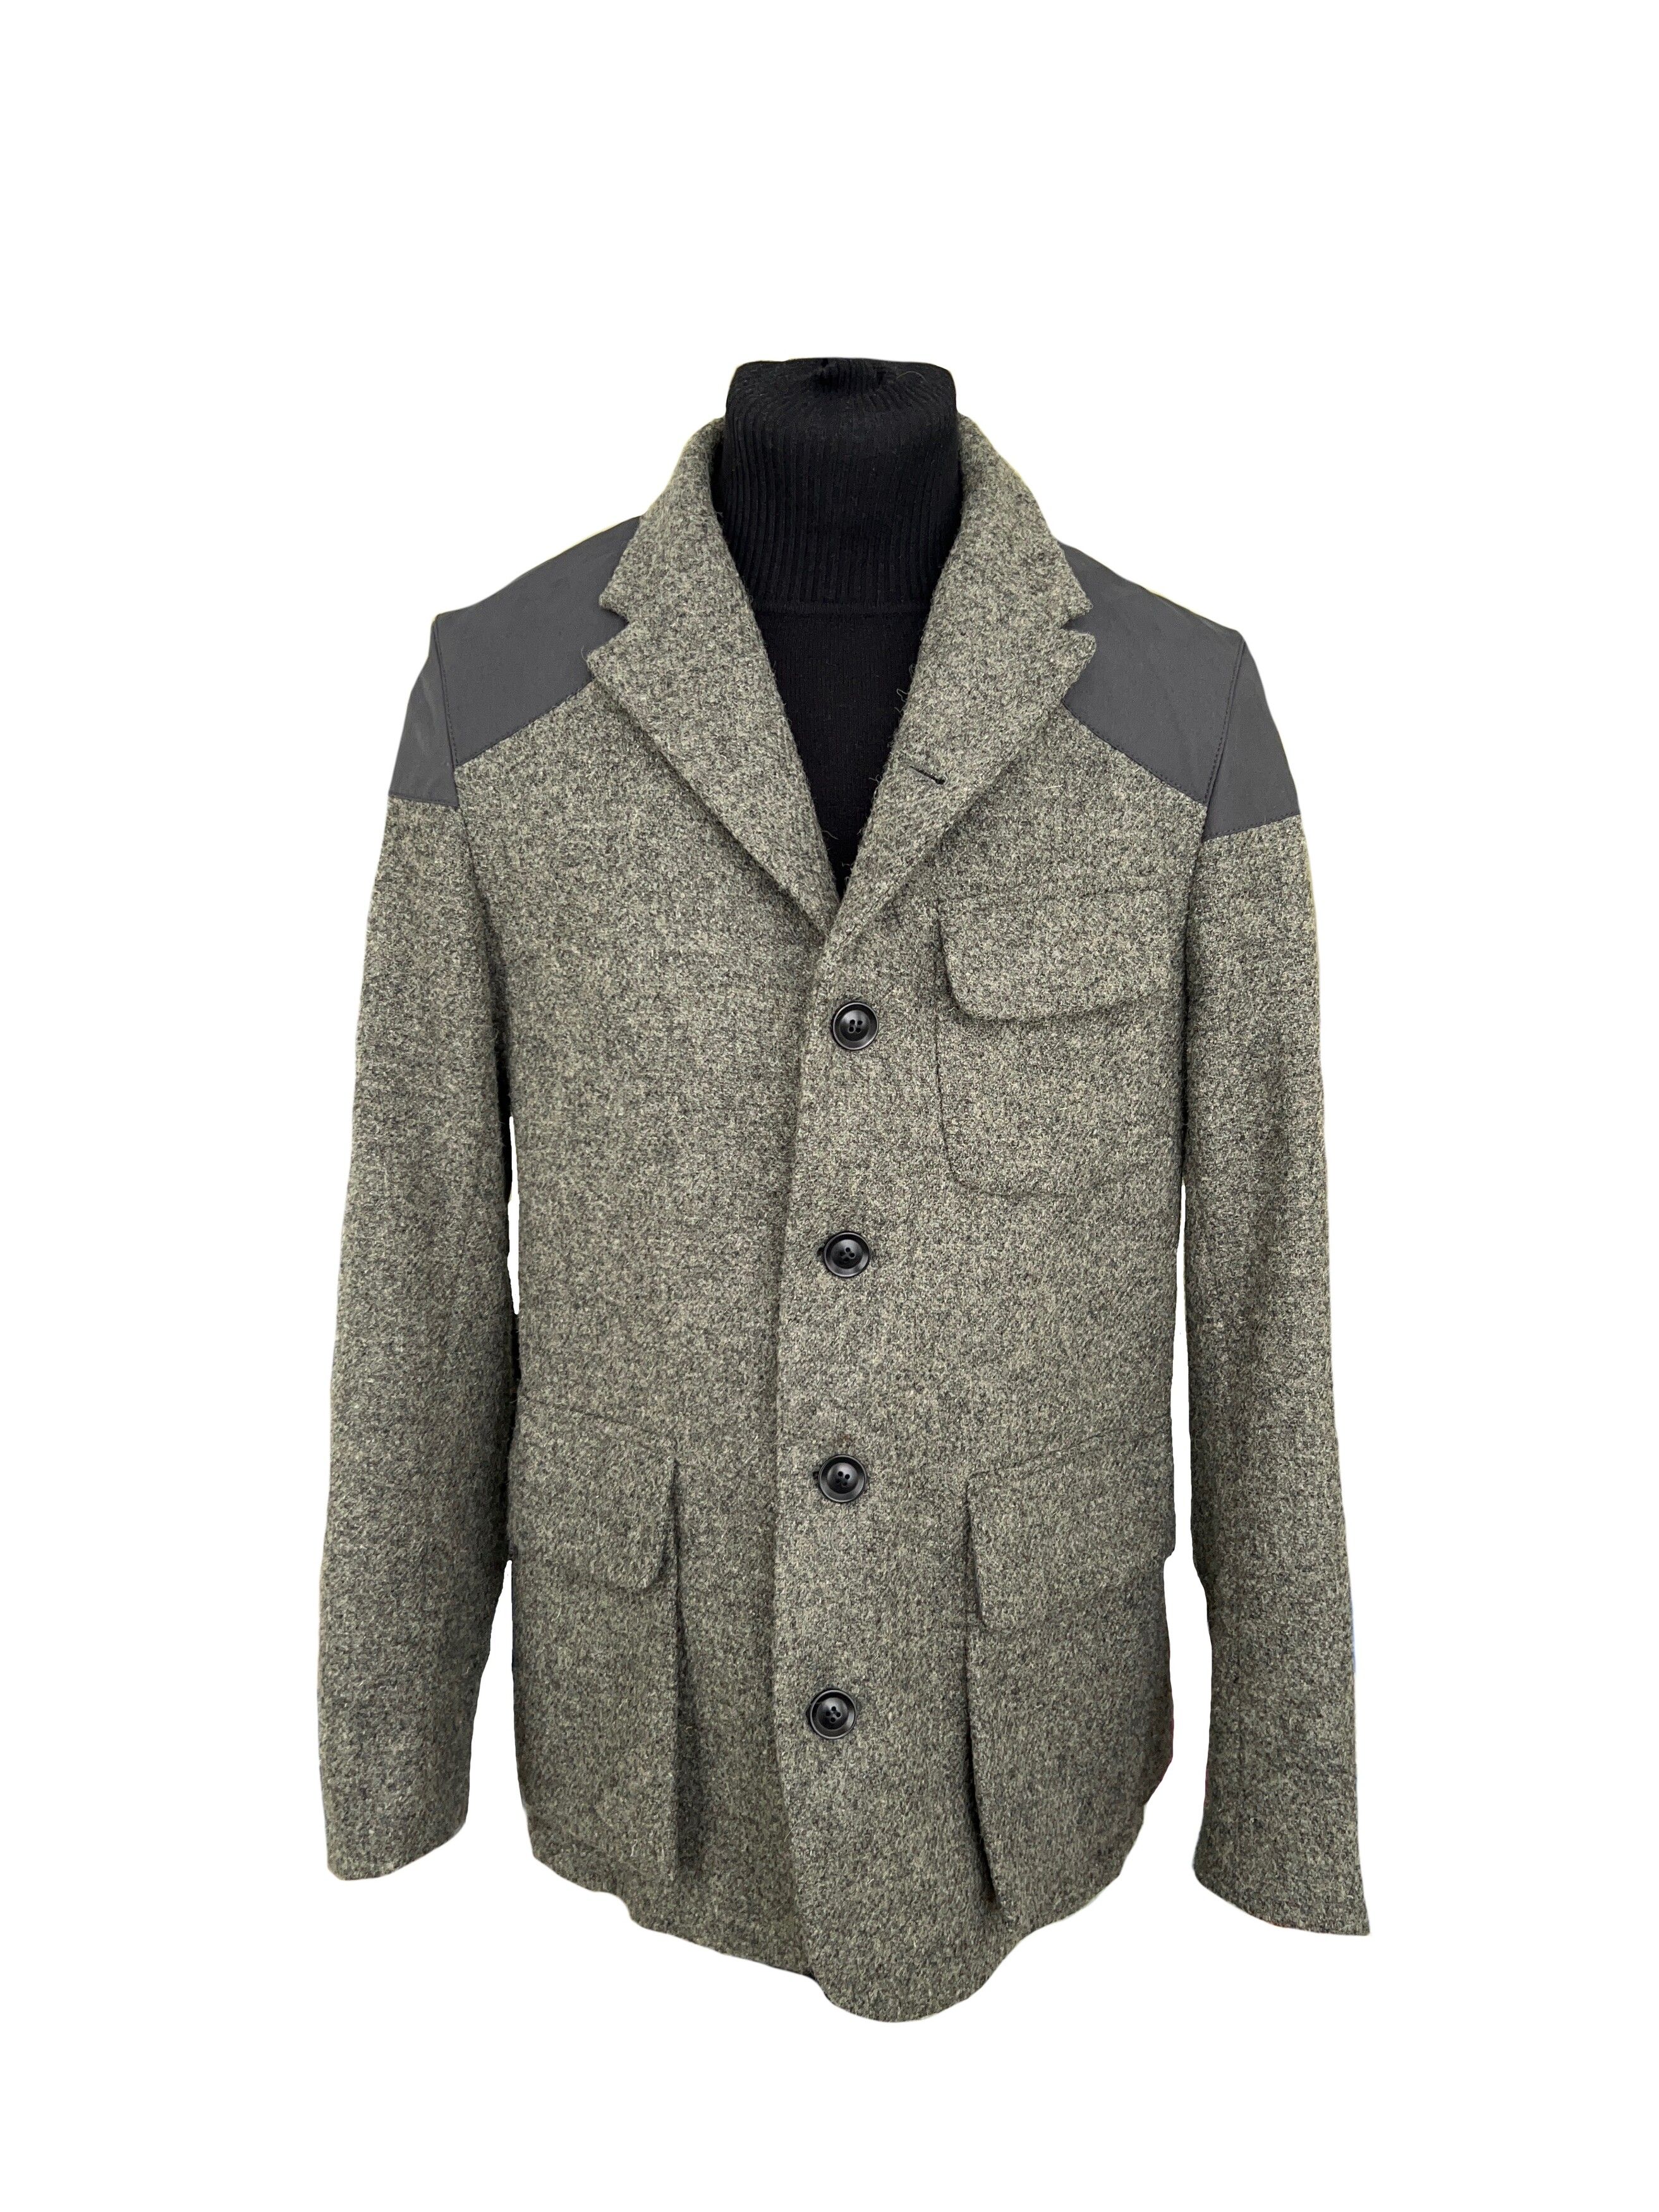 Vintage Nigel Cabourn Harris Tweed Mallory Military Jacket Coat | Grailed